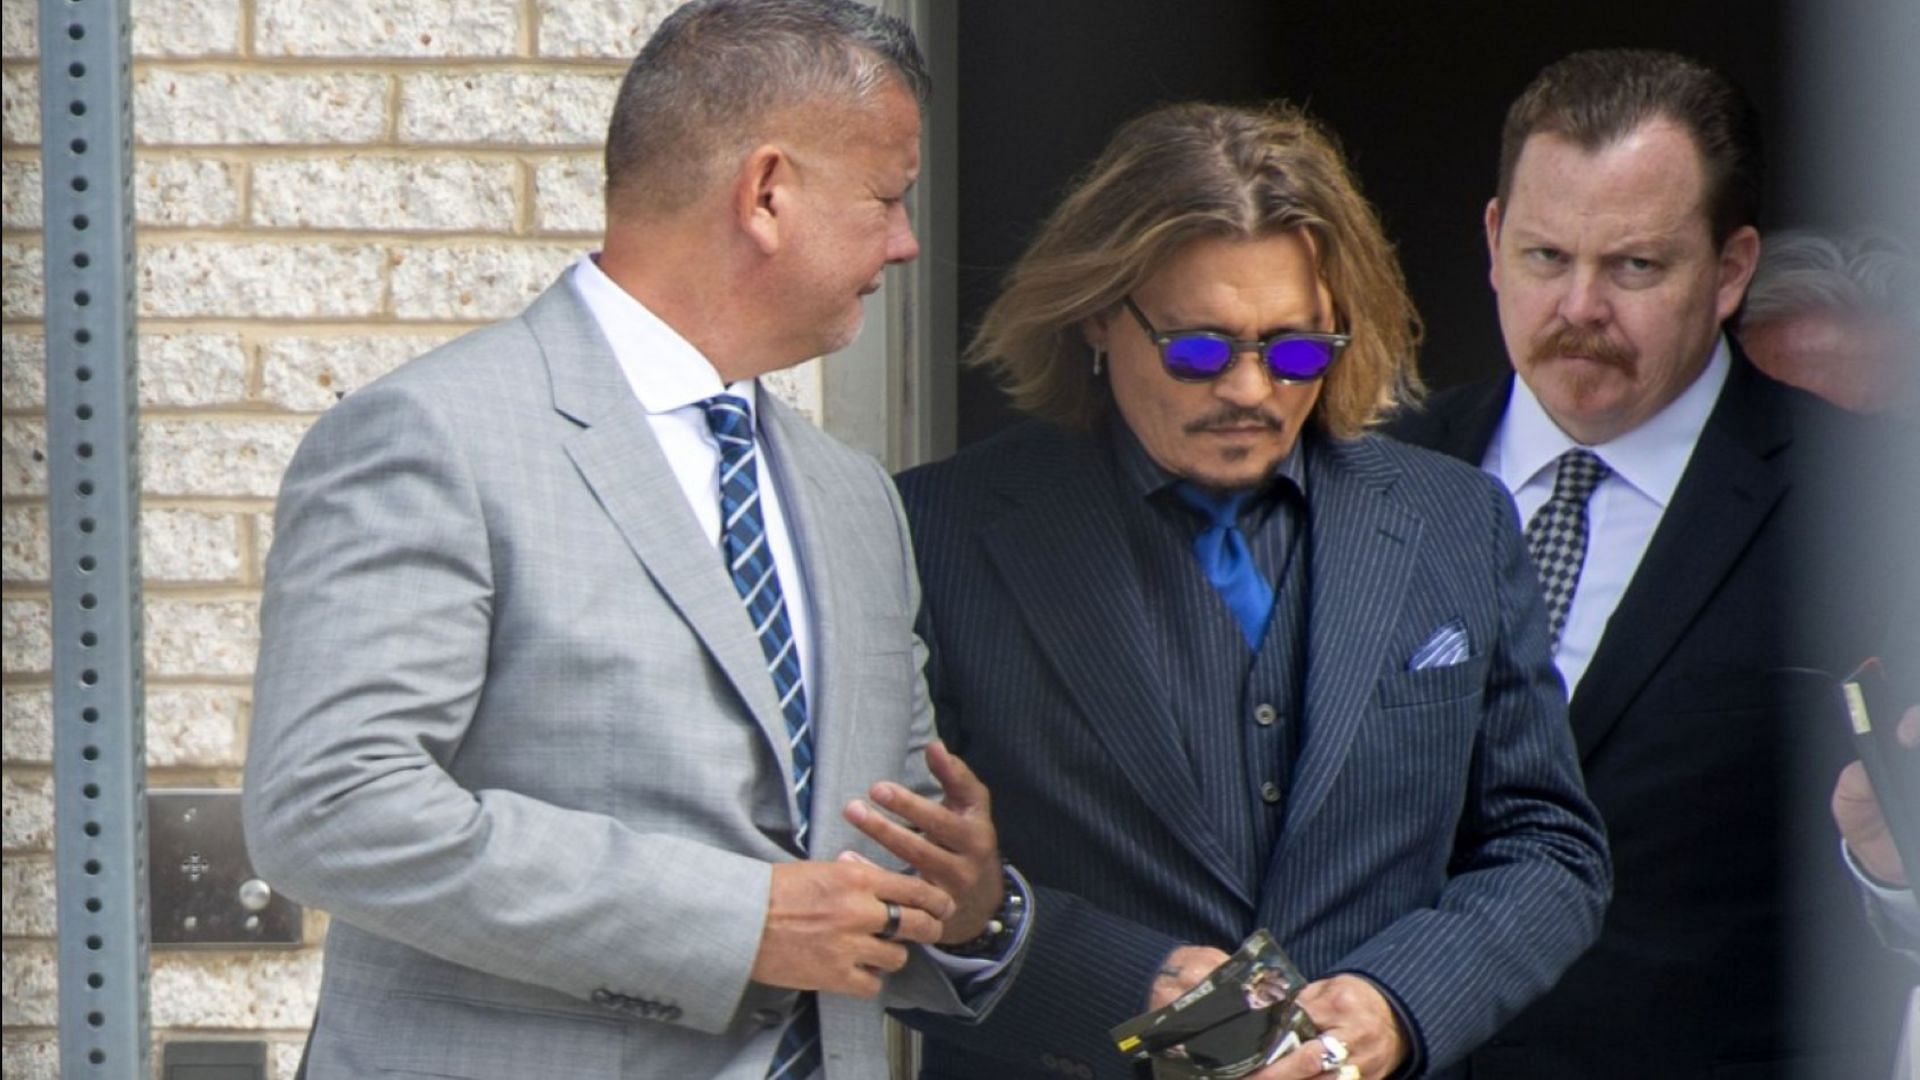 Johnny Depp in the courtroom (Image via Bonnie Cash)